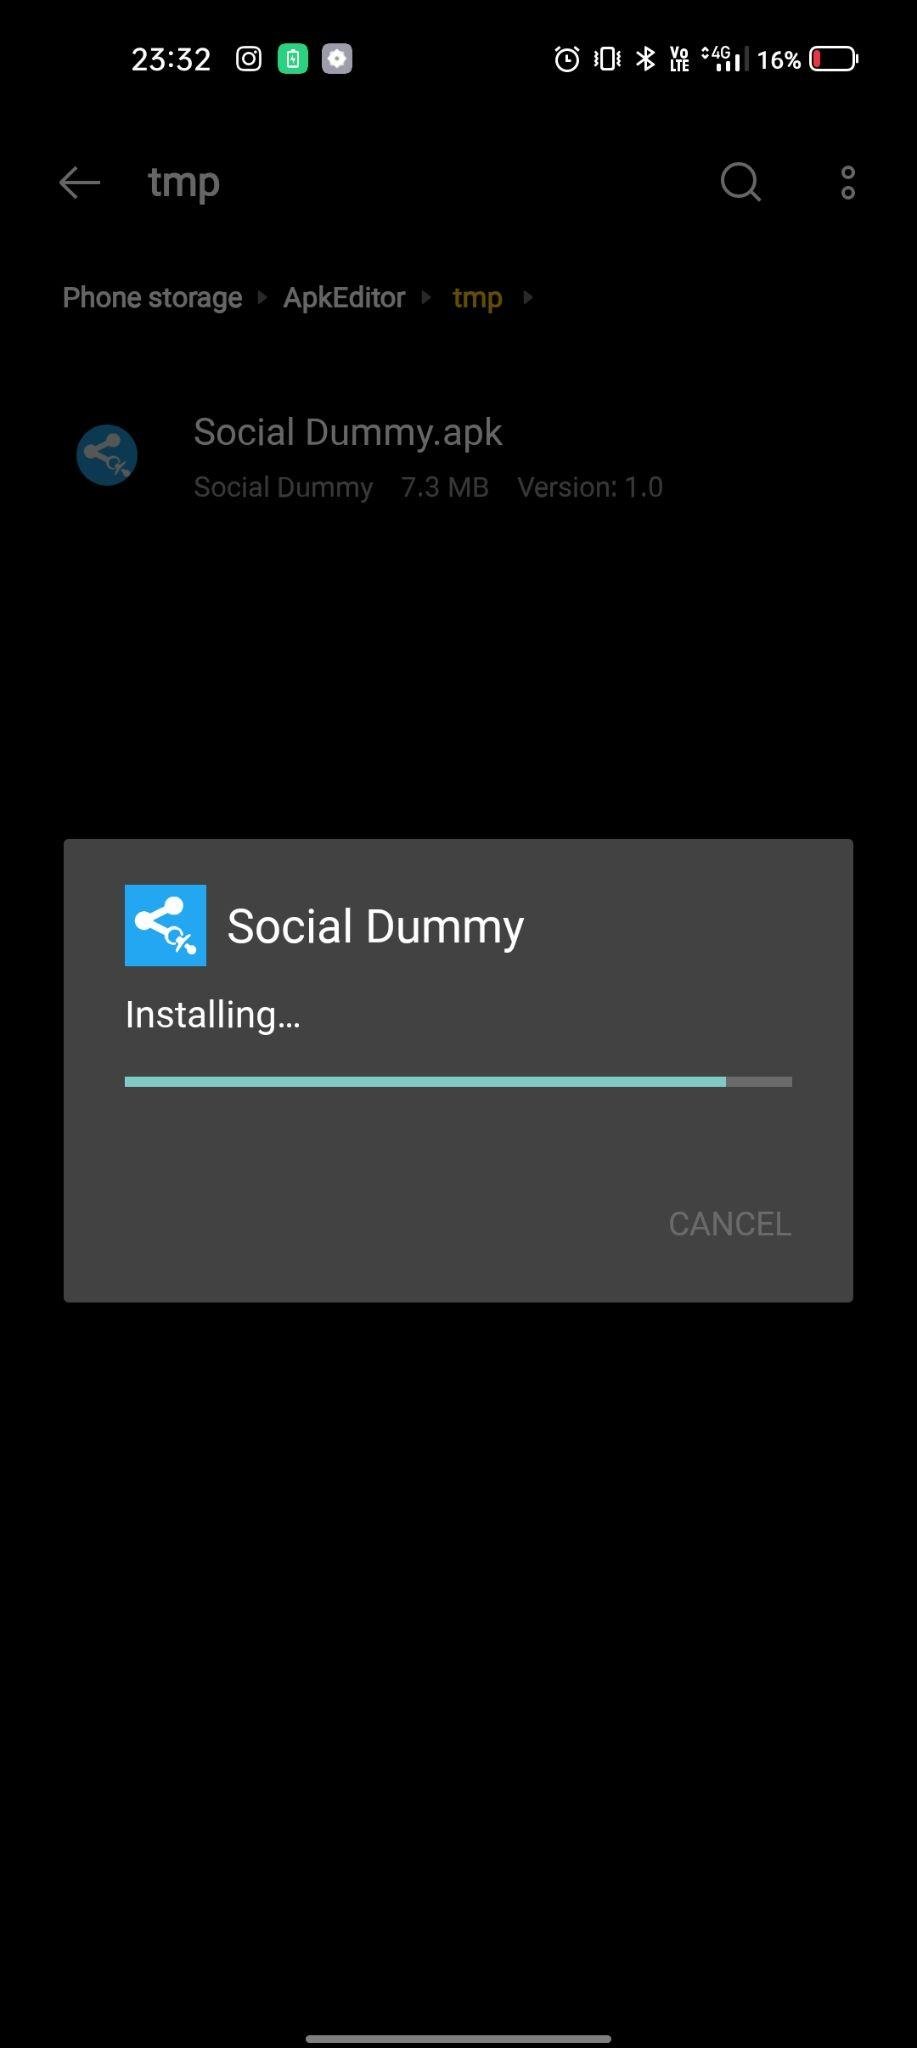 social dummy apk installing